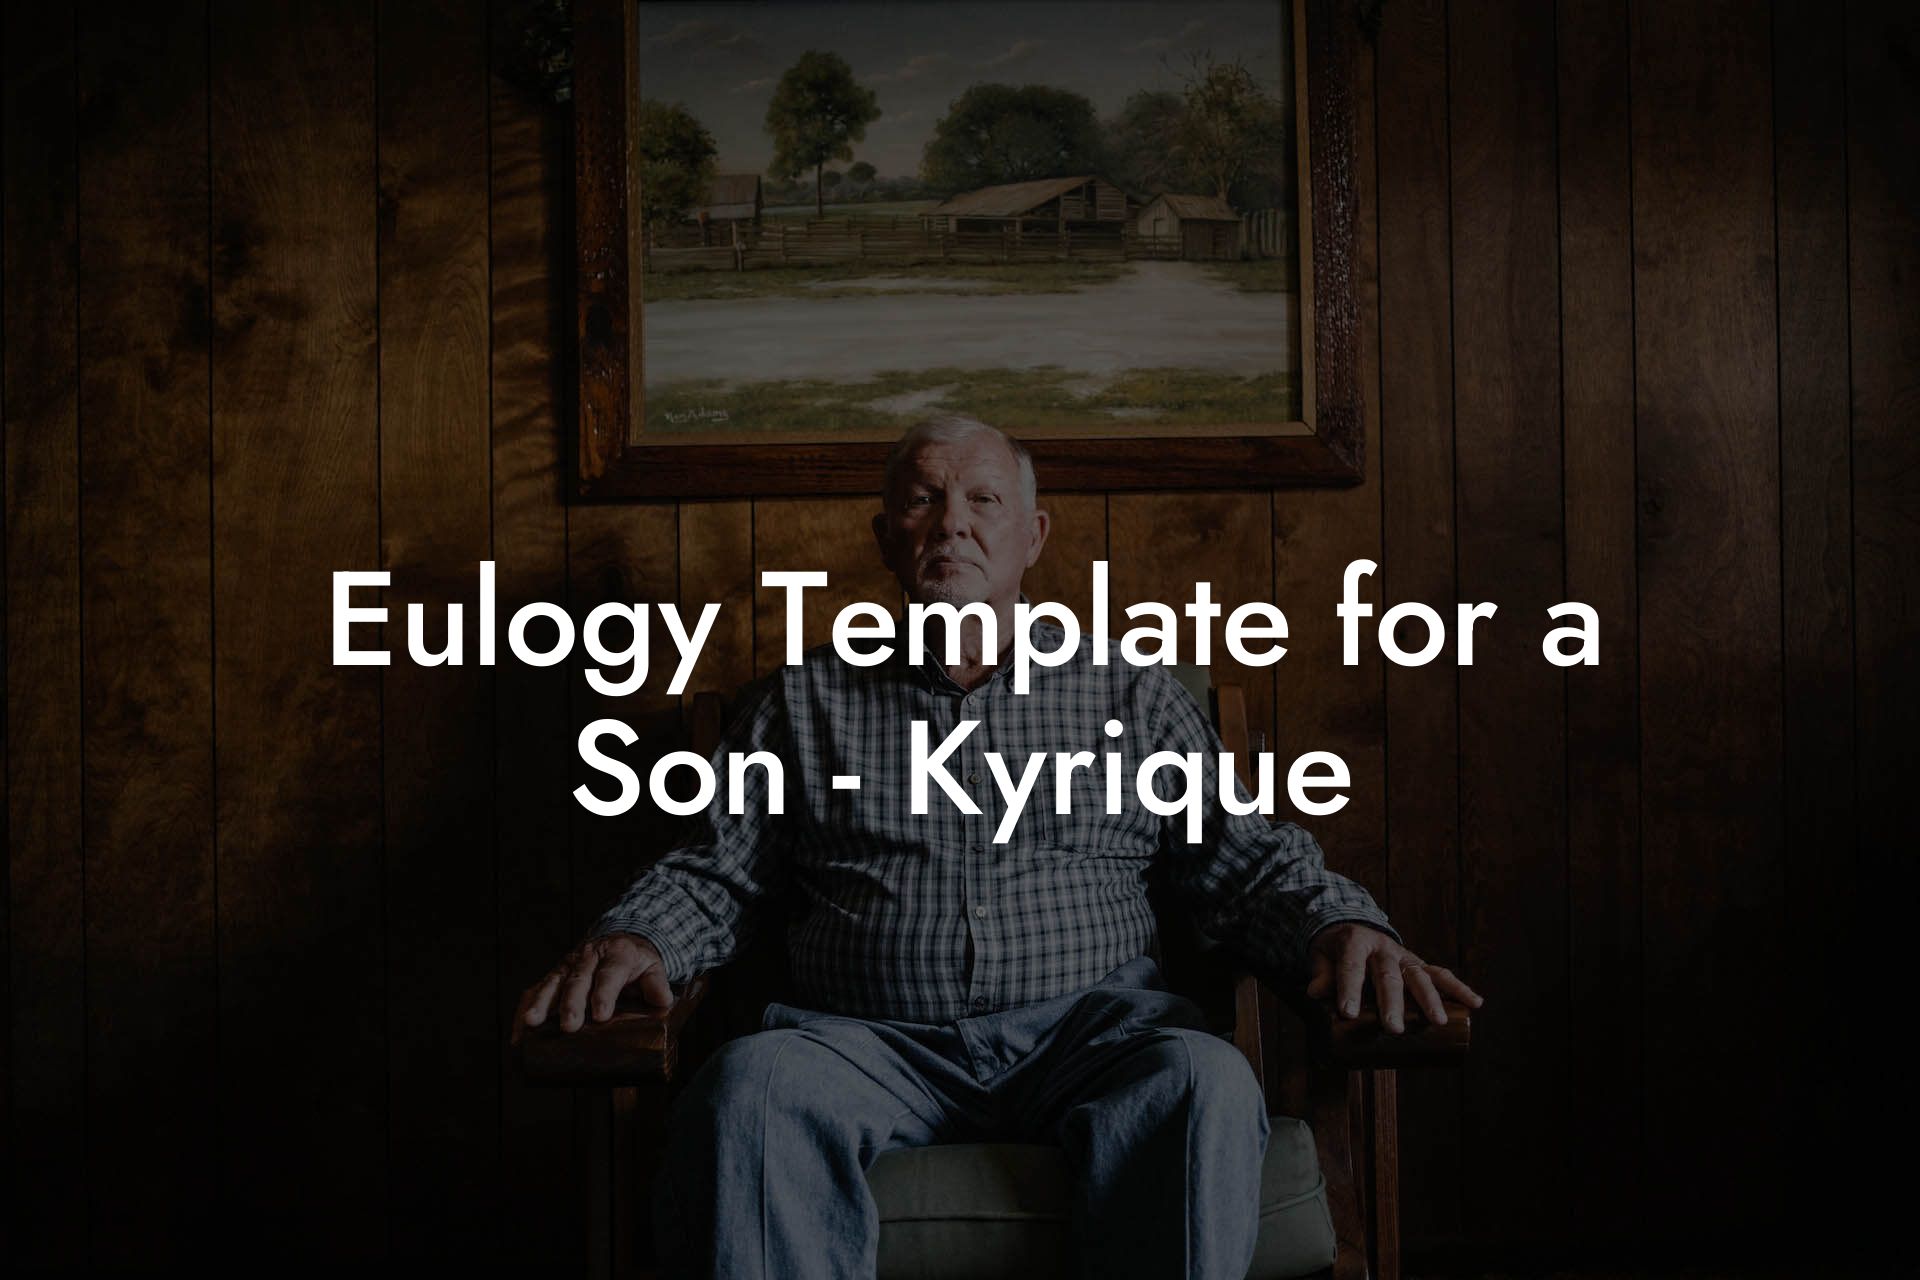 Eulogy Template for a Son - Kyrique